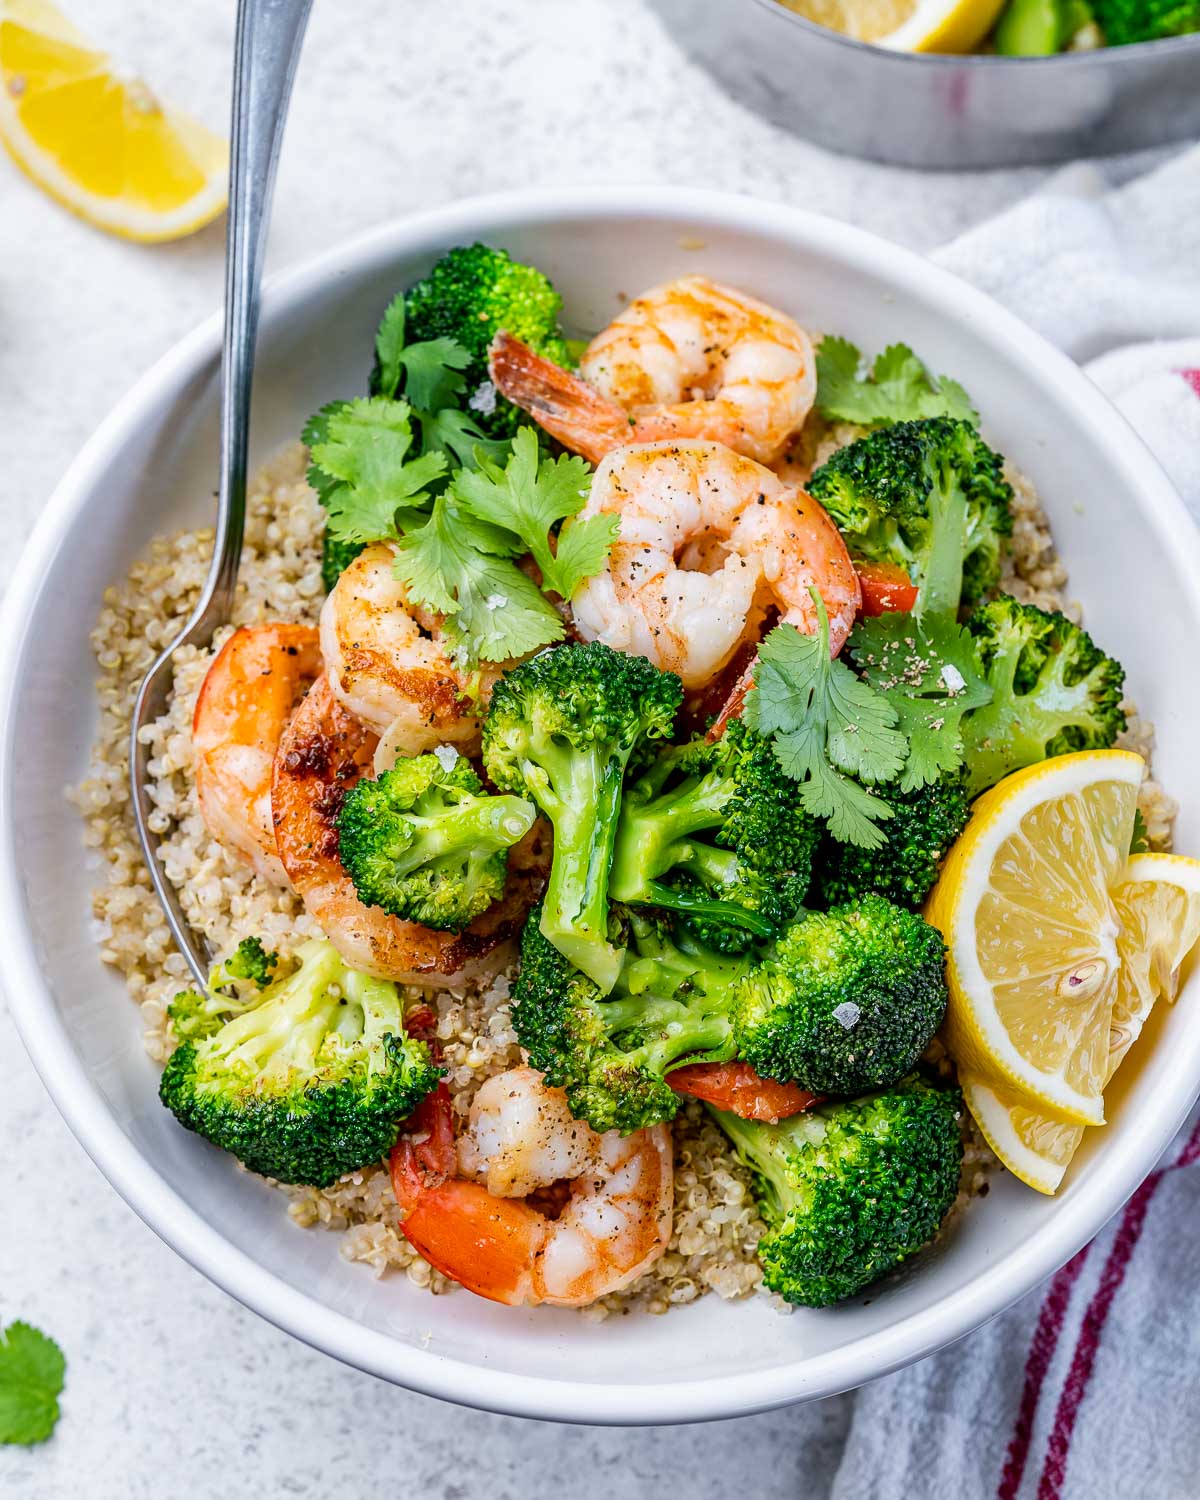 https://cleanfoodcrush.com/wp-content/uploads/2023/05/Easy-Shrimp-Garlicky-Broccoli-Skillet.jpg